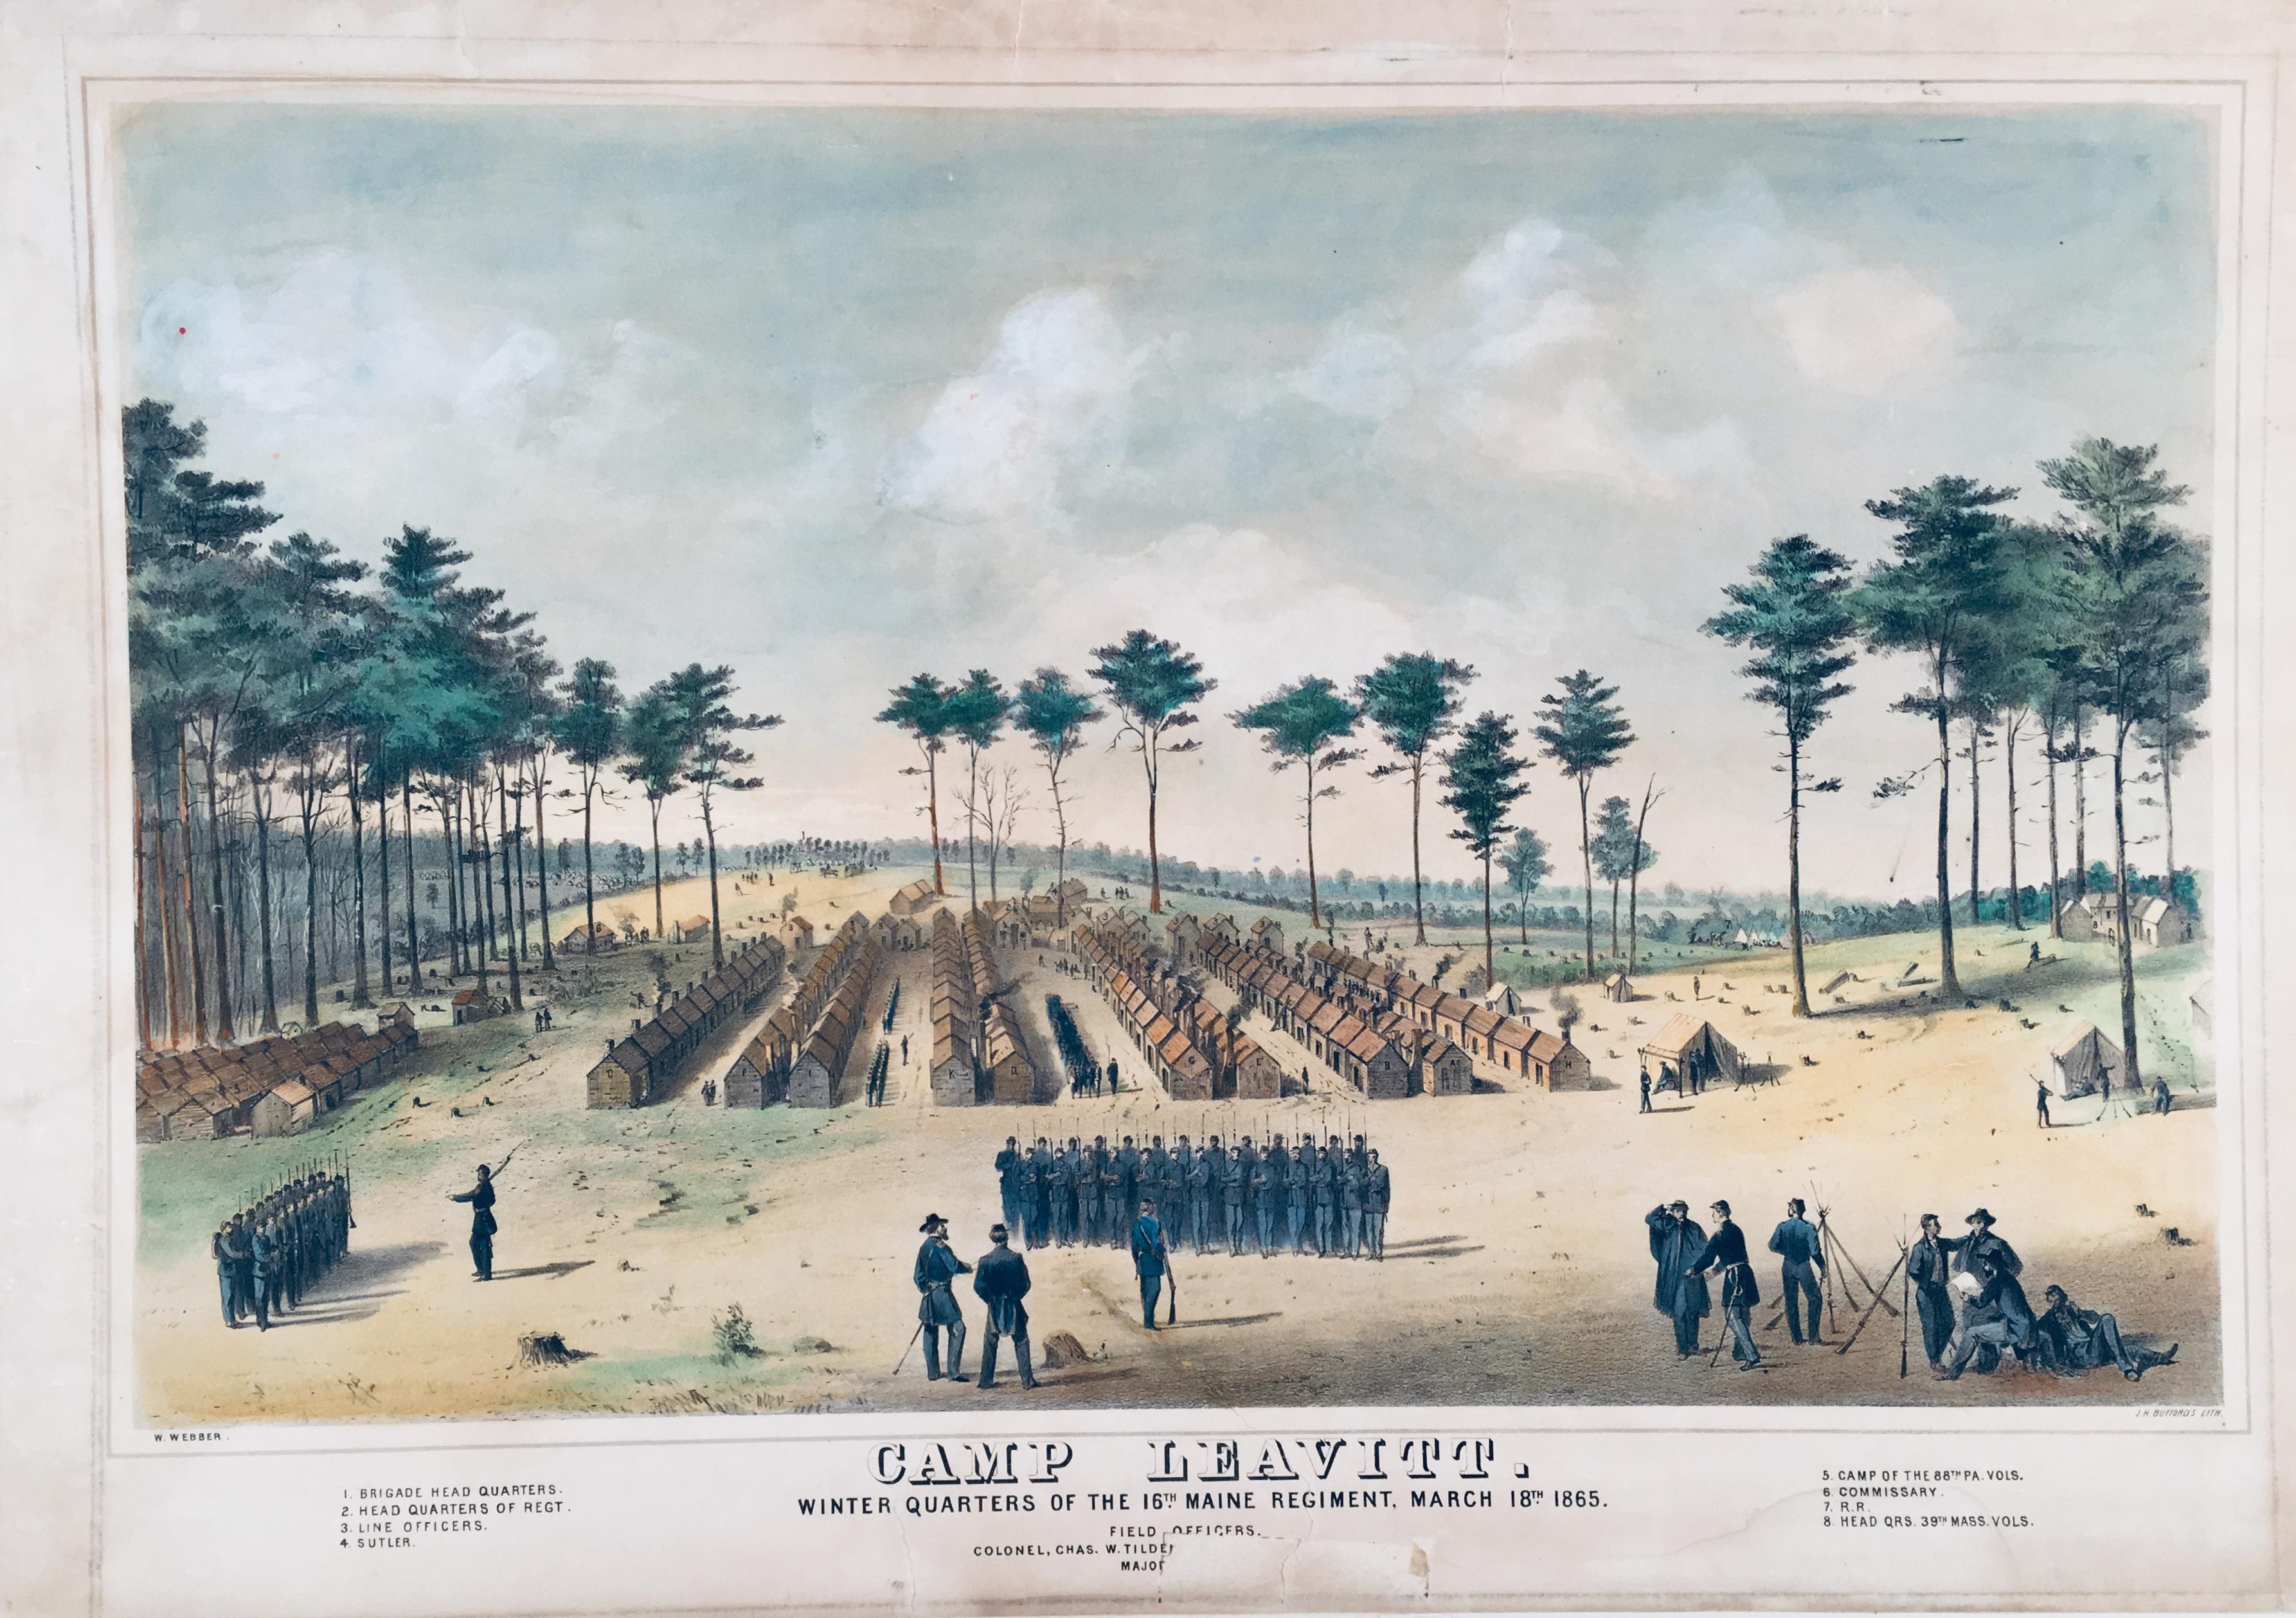 Camp Leavitt.  Winter Quarters of the 16th Maine Regiment, March 18, 1865